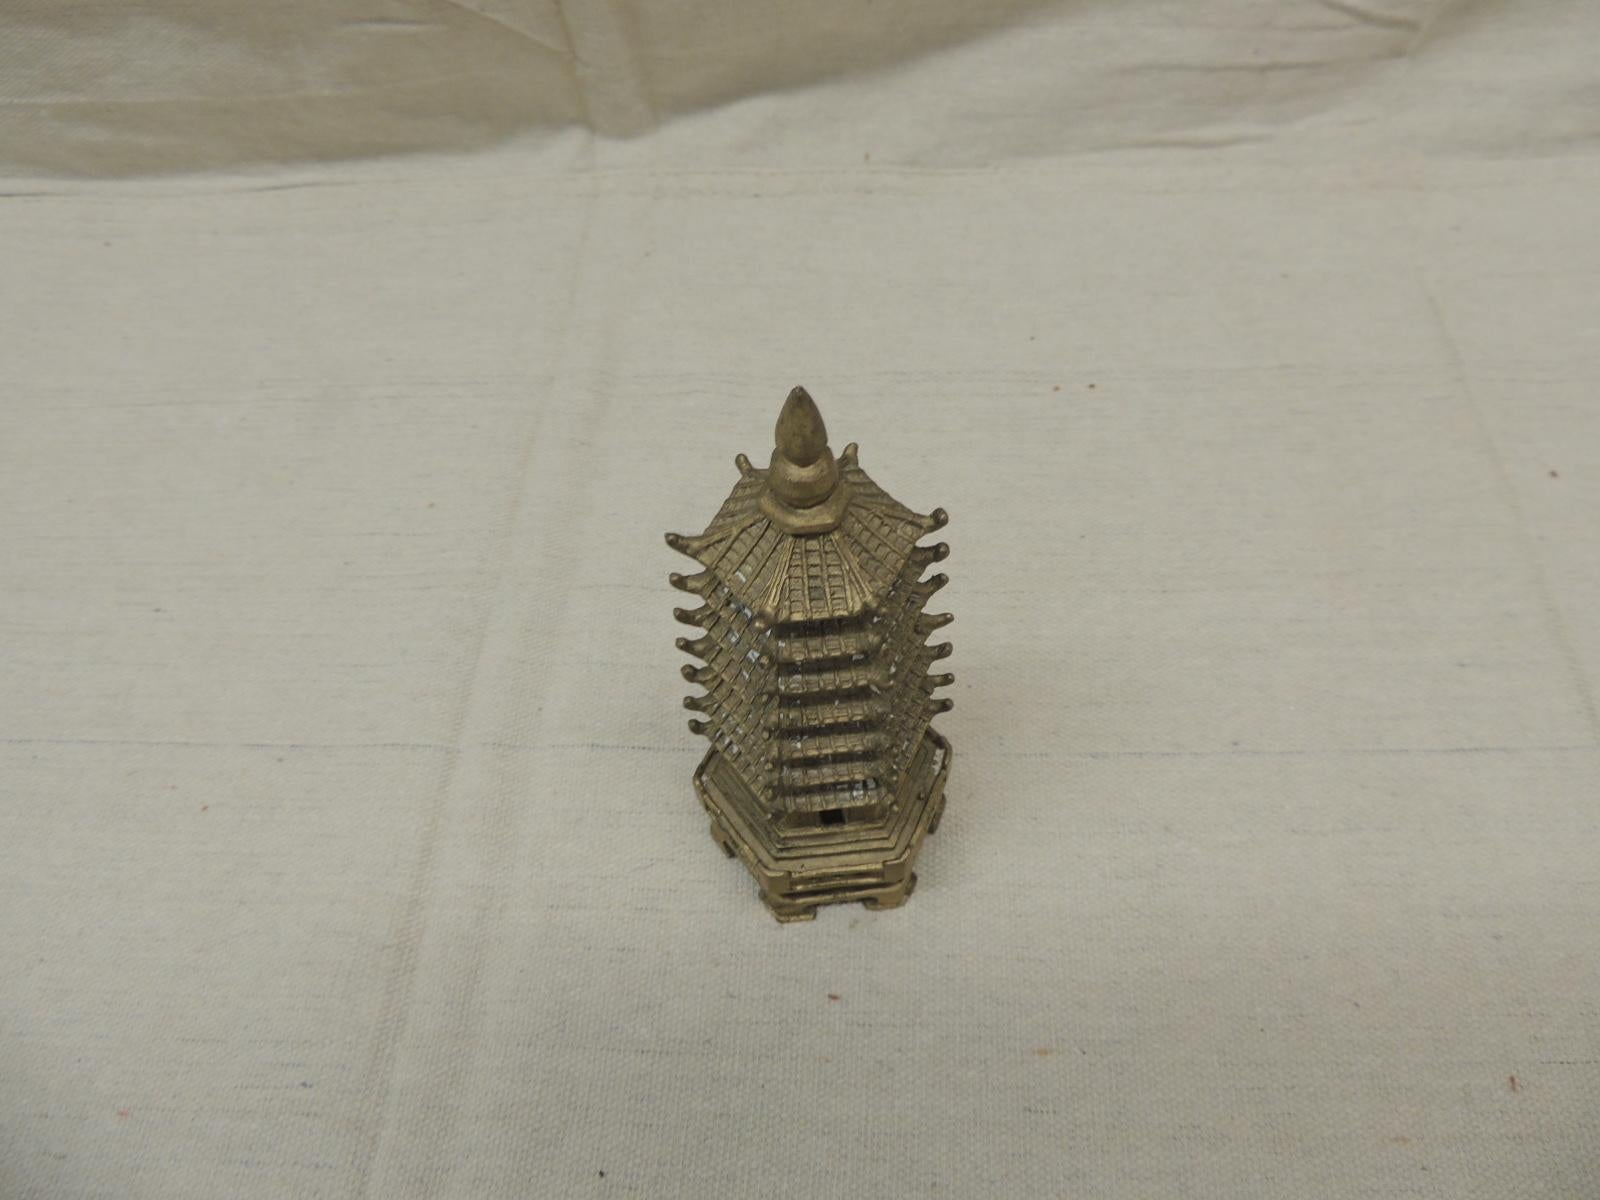 Antique brass finish miniature brass pagoda.
Size: 2